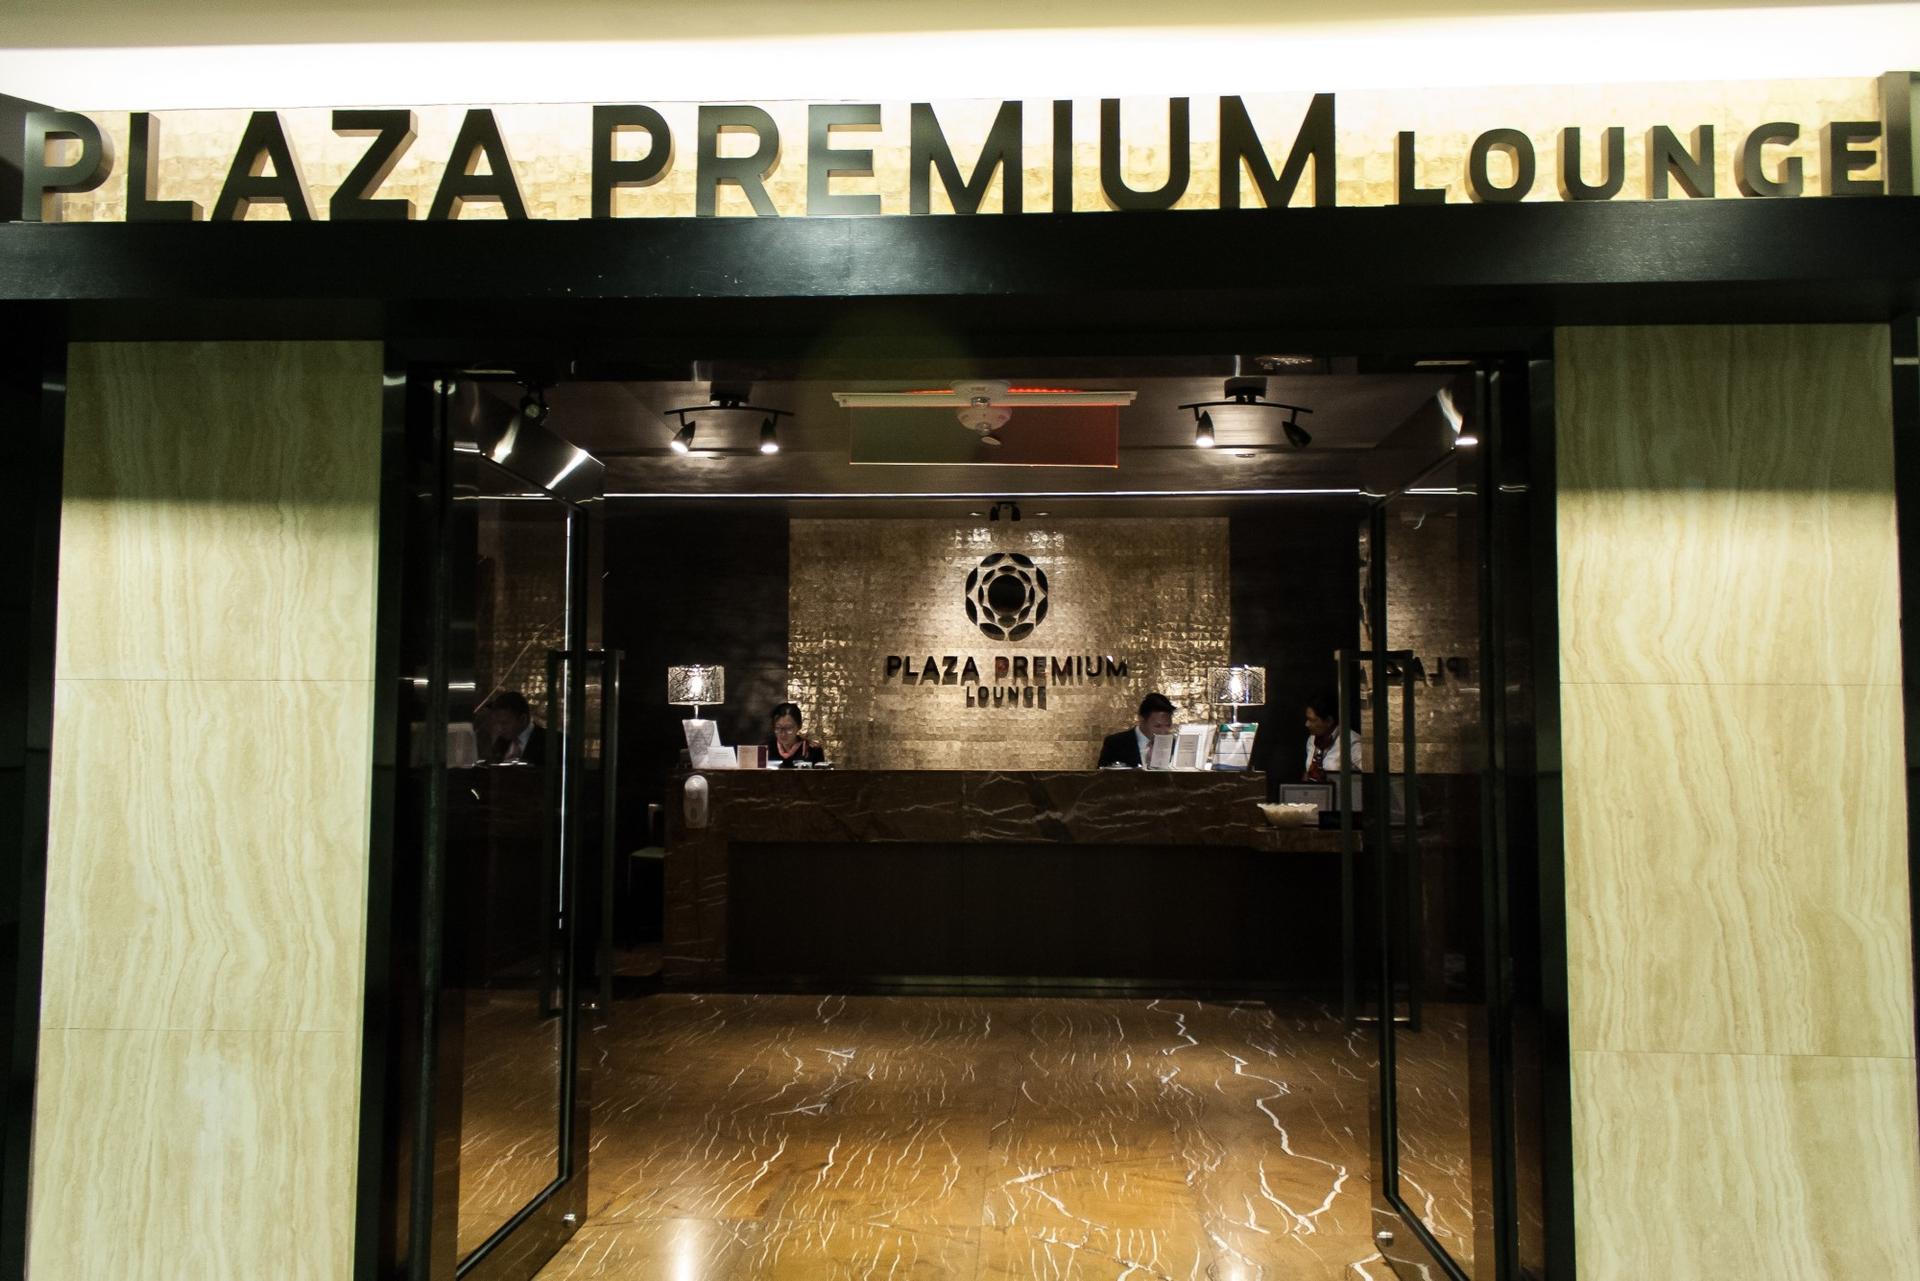 Plaza Premium Lounge image 24 of 44